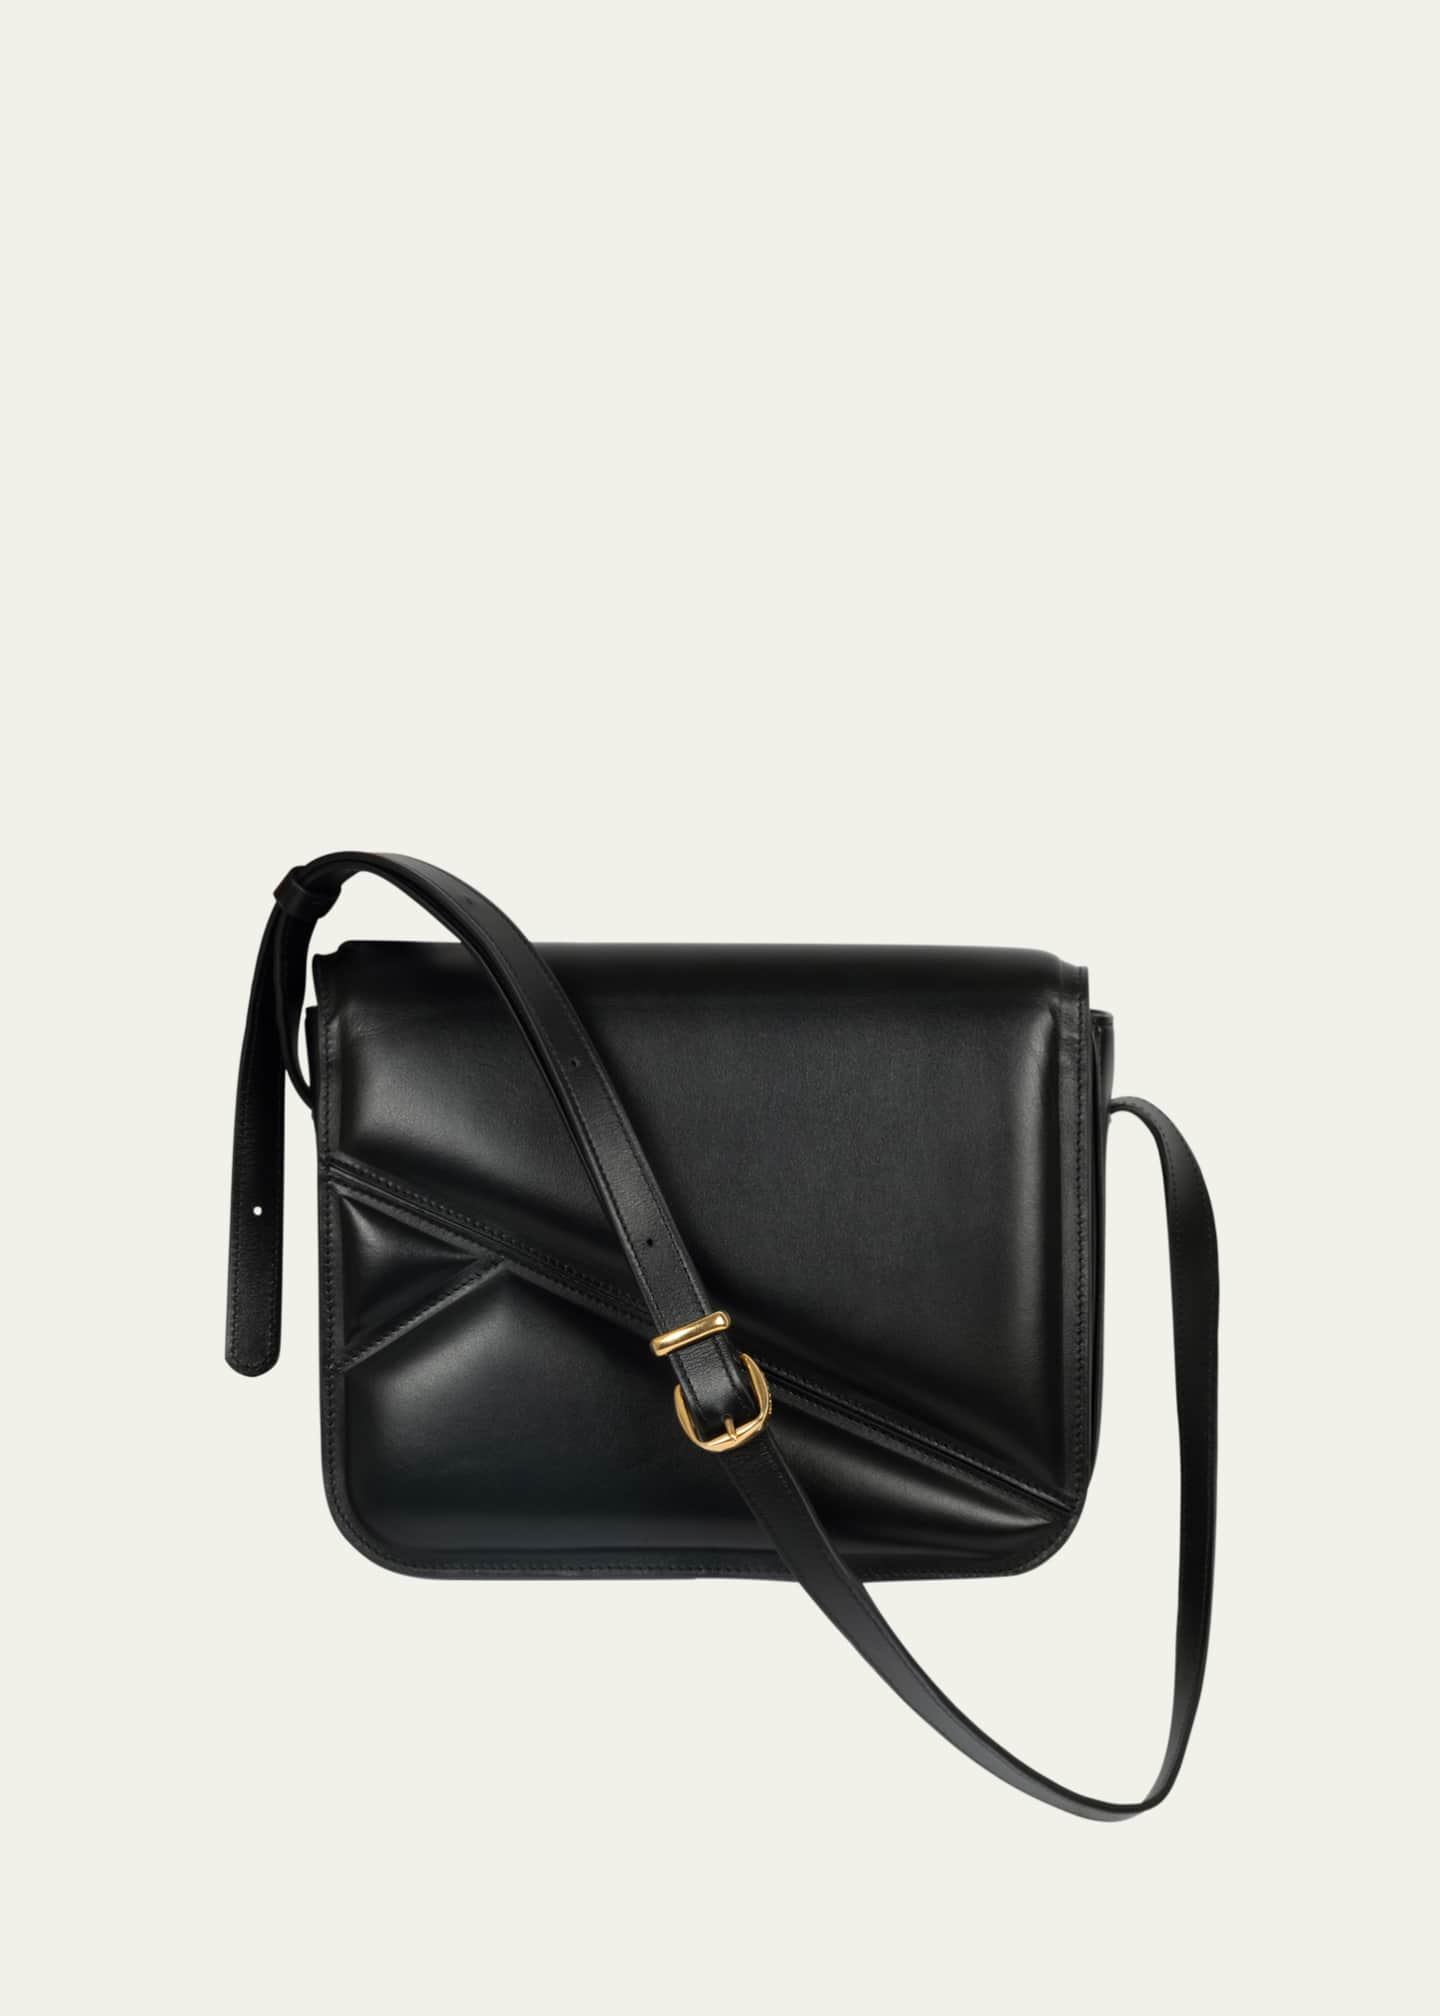 The Row - Black Leather Envelope Crossbody Bag